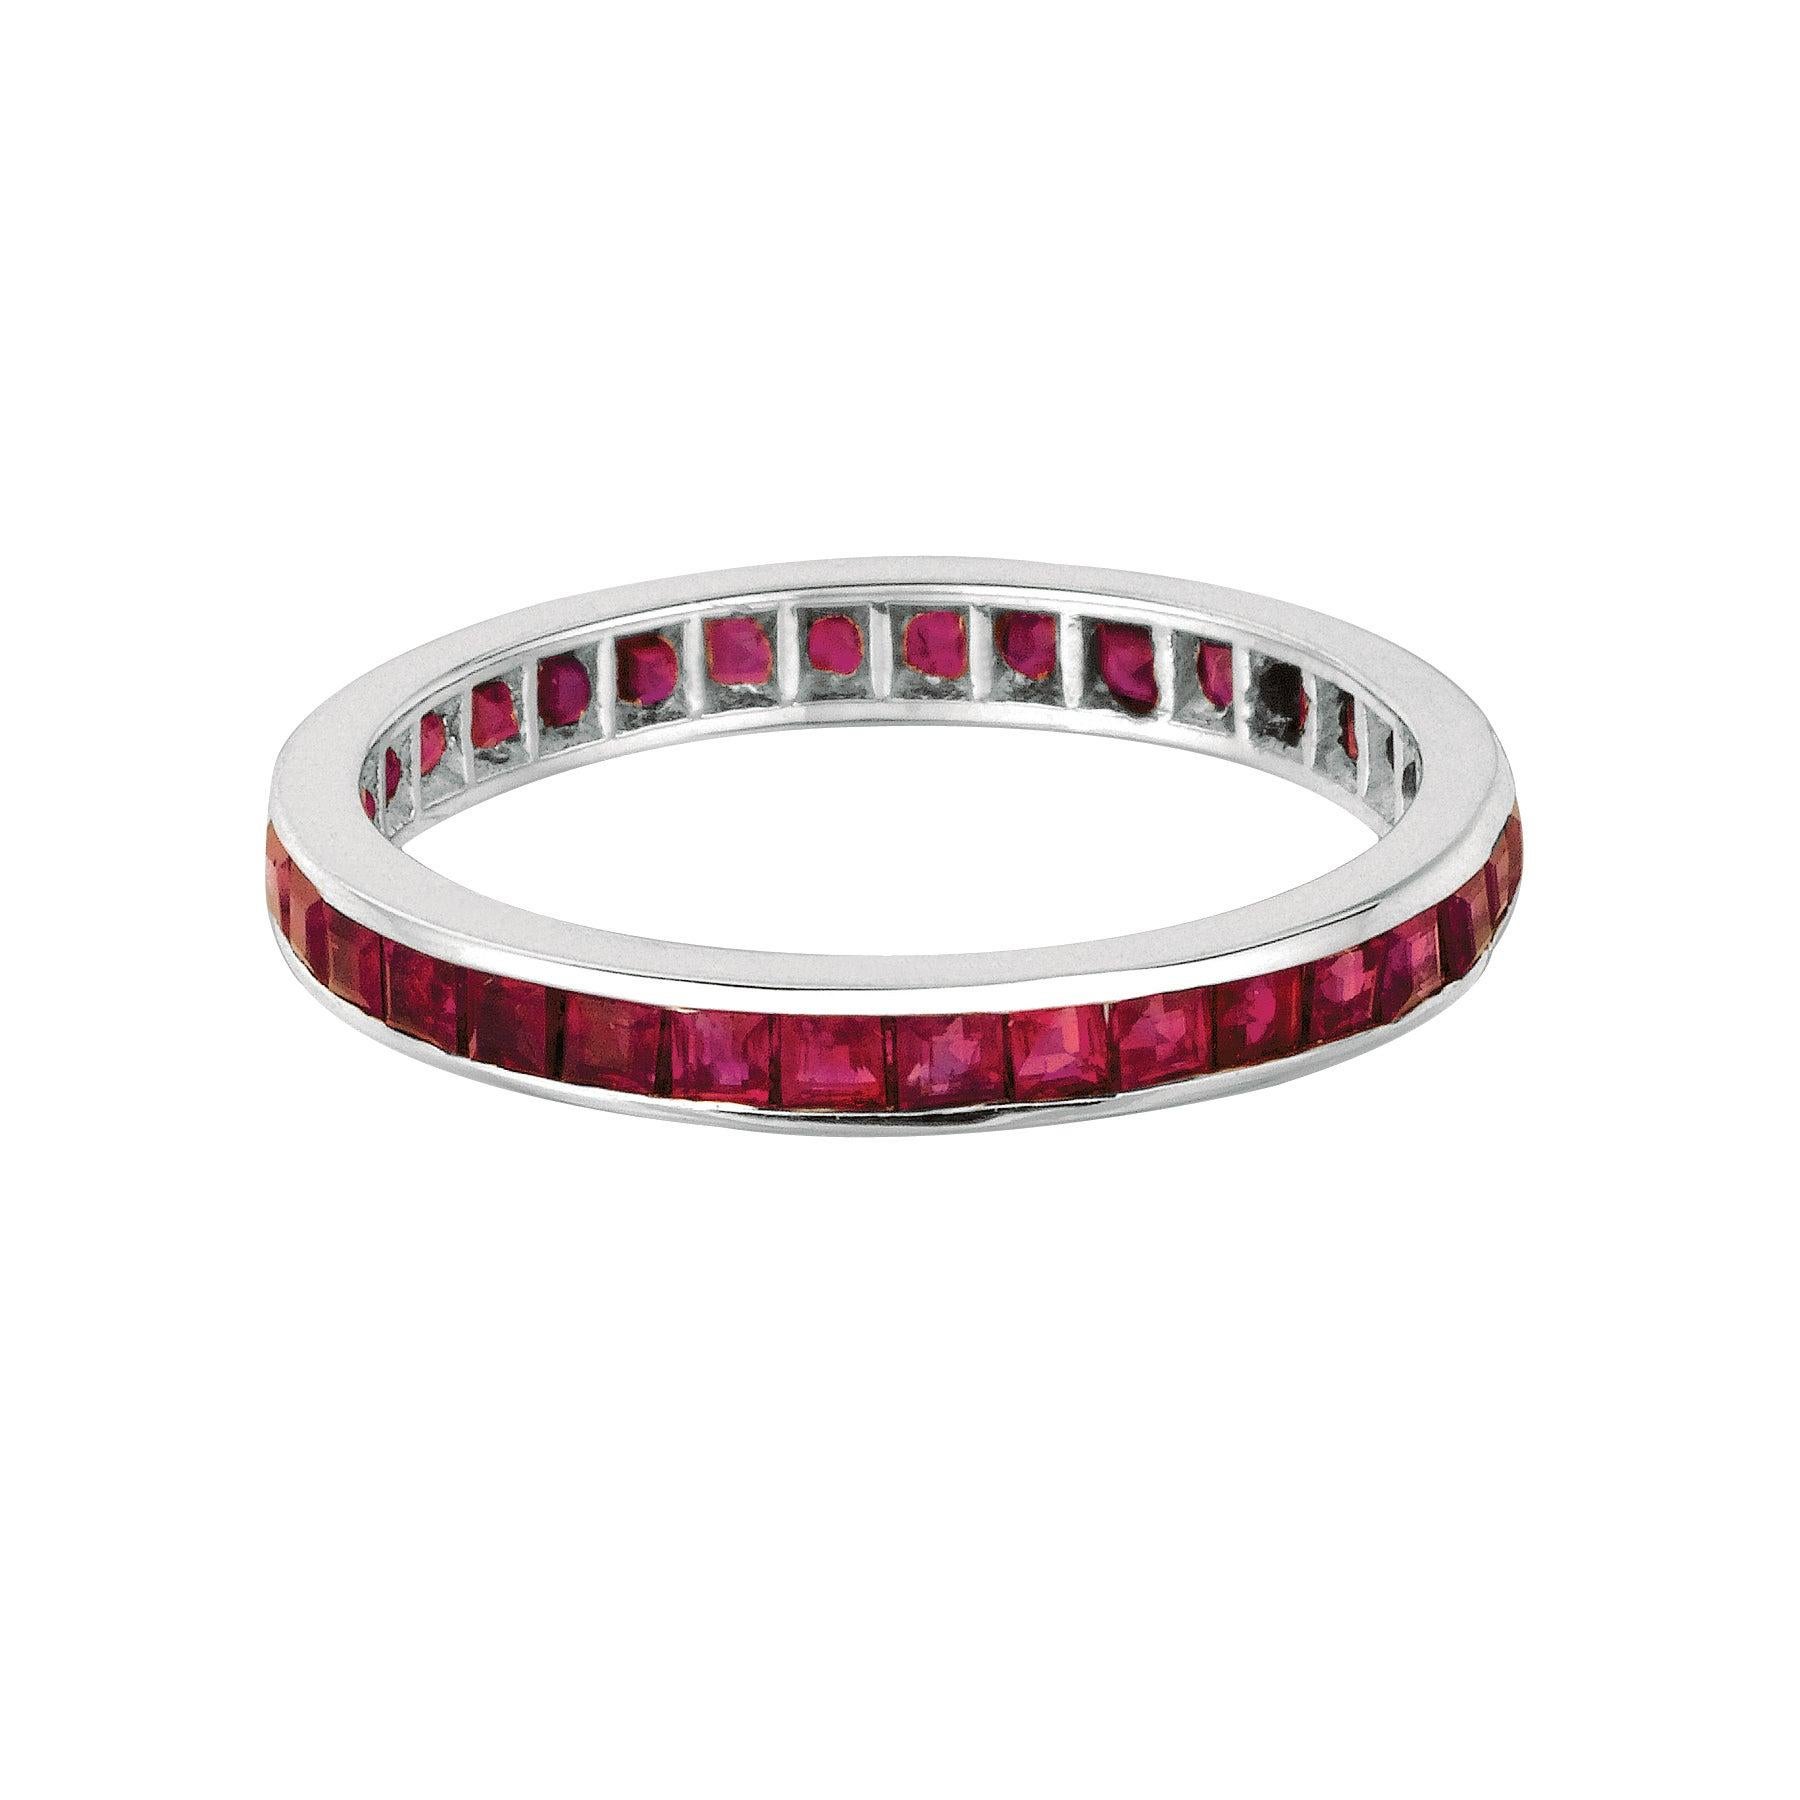 For Sale:  1.20 Carat Princess Cut Natural Ruby Ring Band 14 Karat White Gold 3